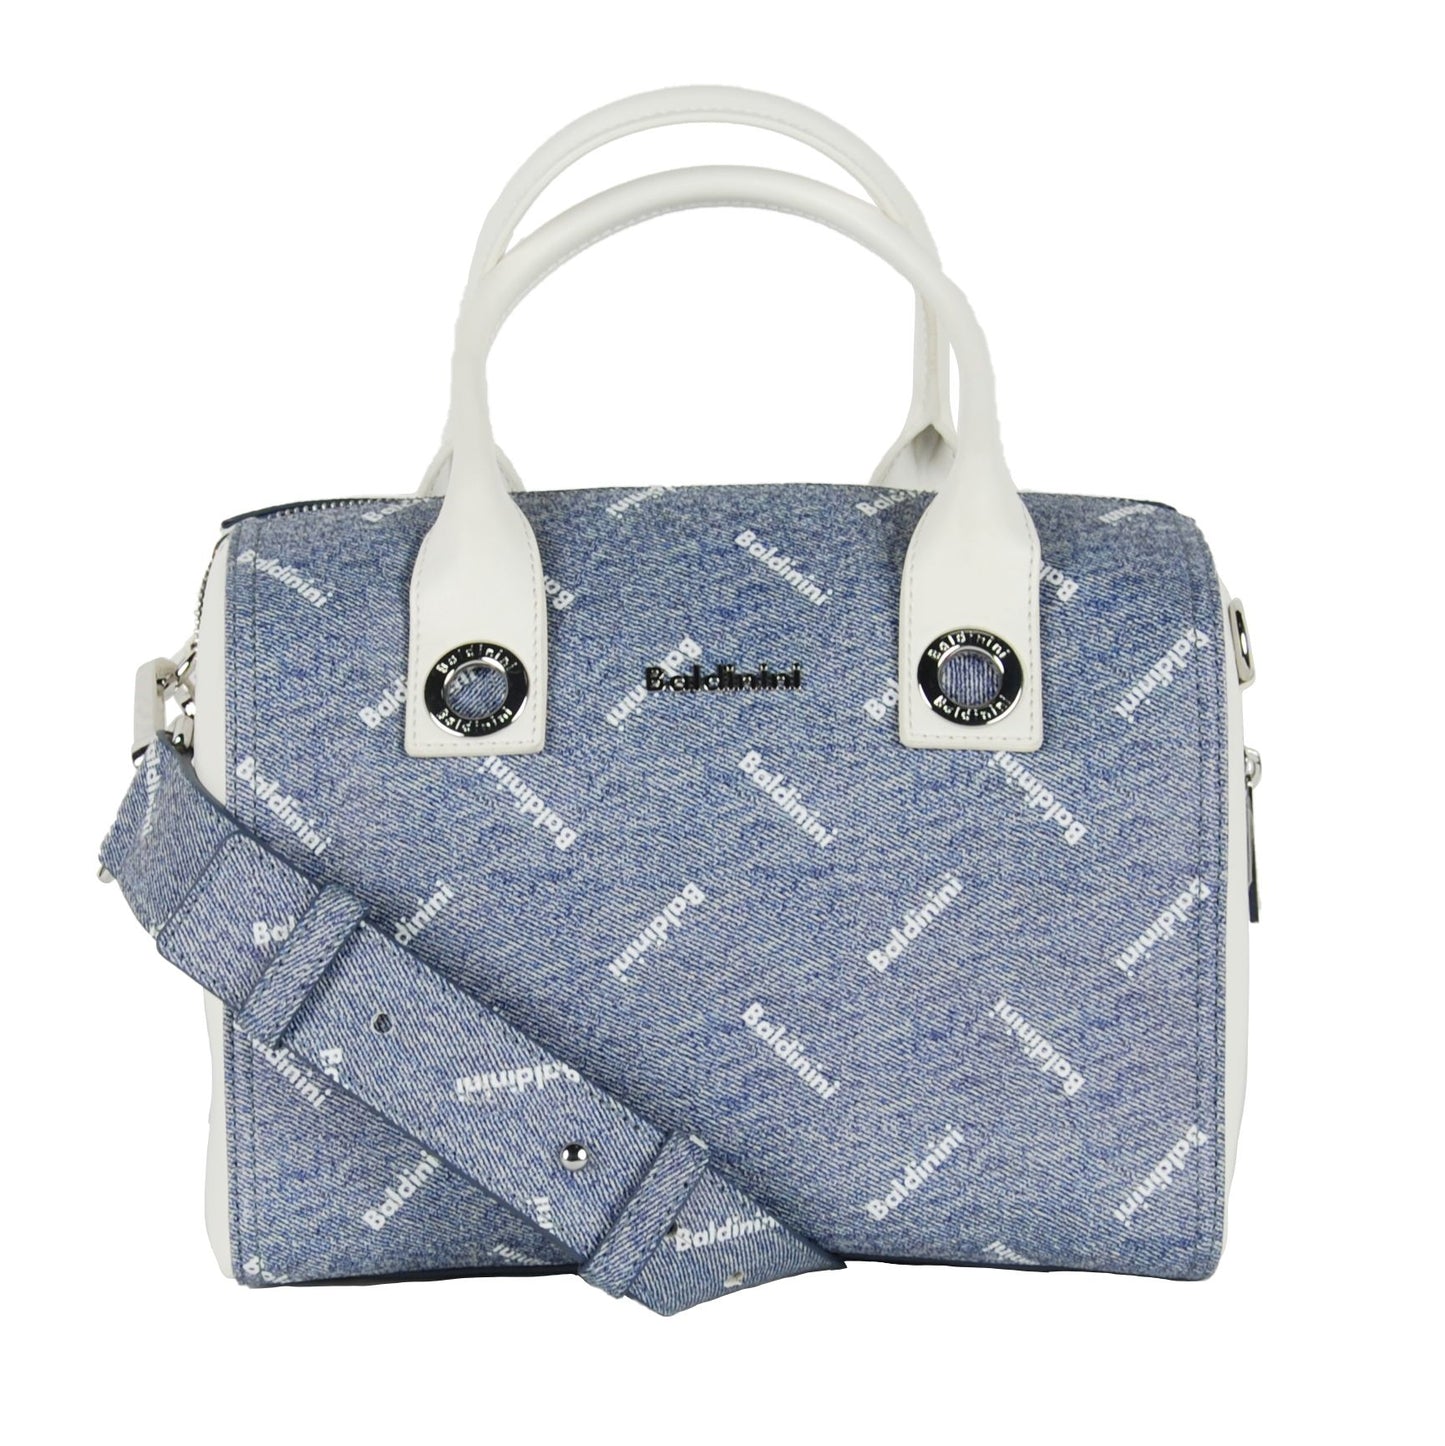 Blue Pvc Handbag